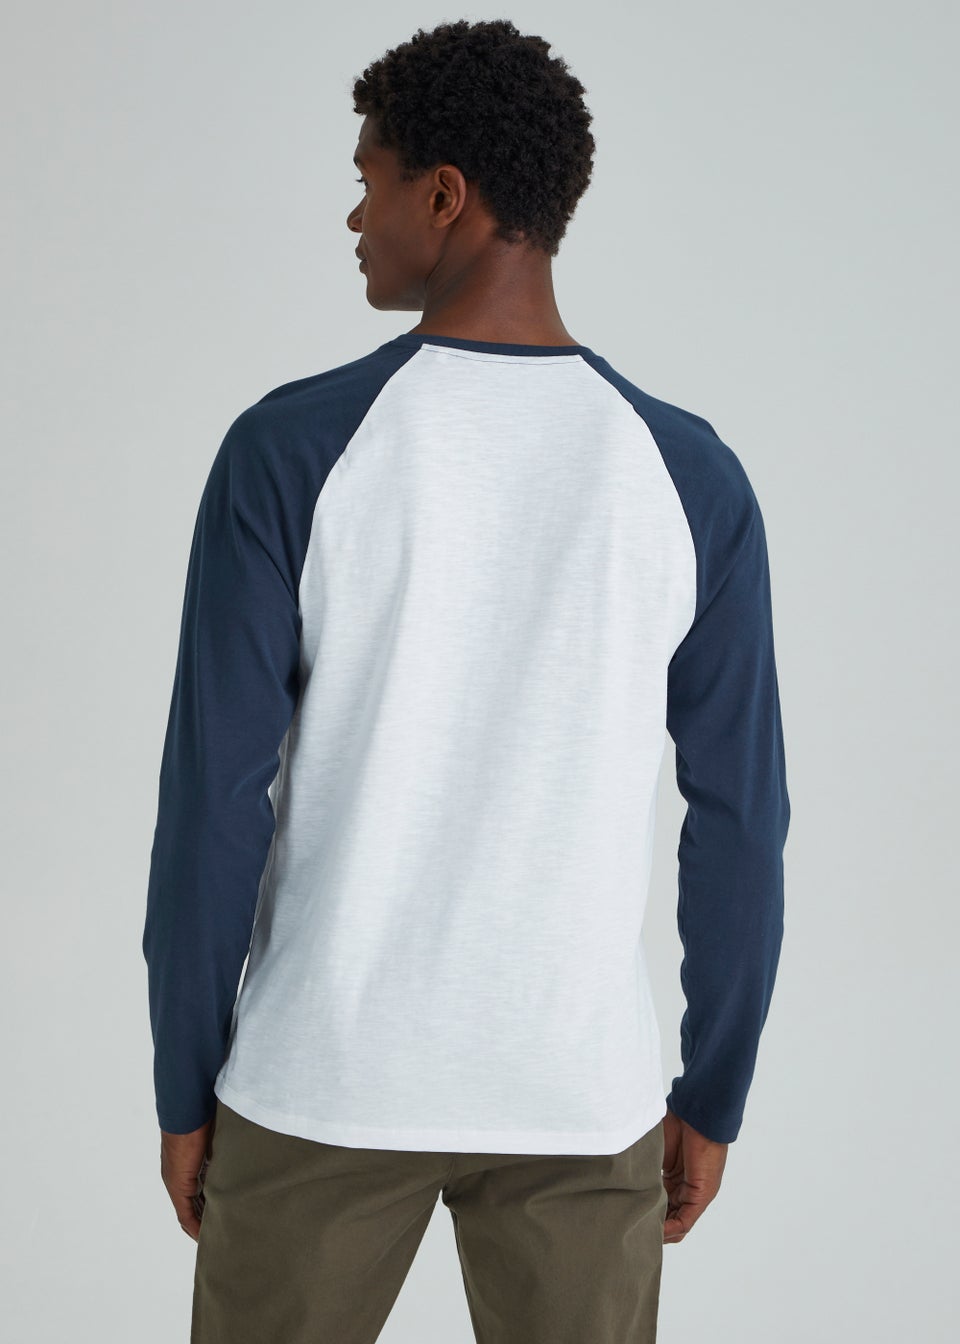 Blue & White Long Sleeve Raglan T-Shirt